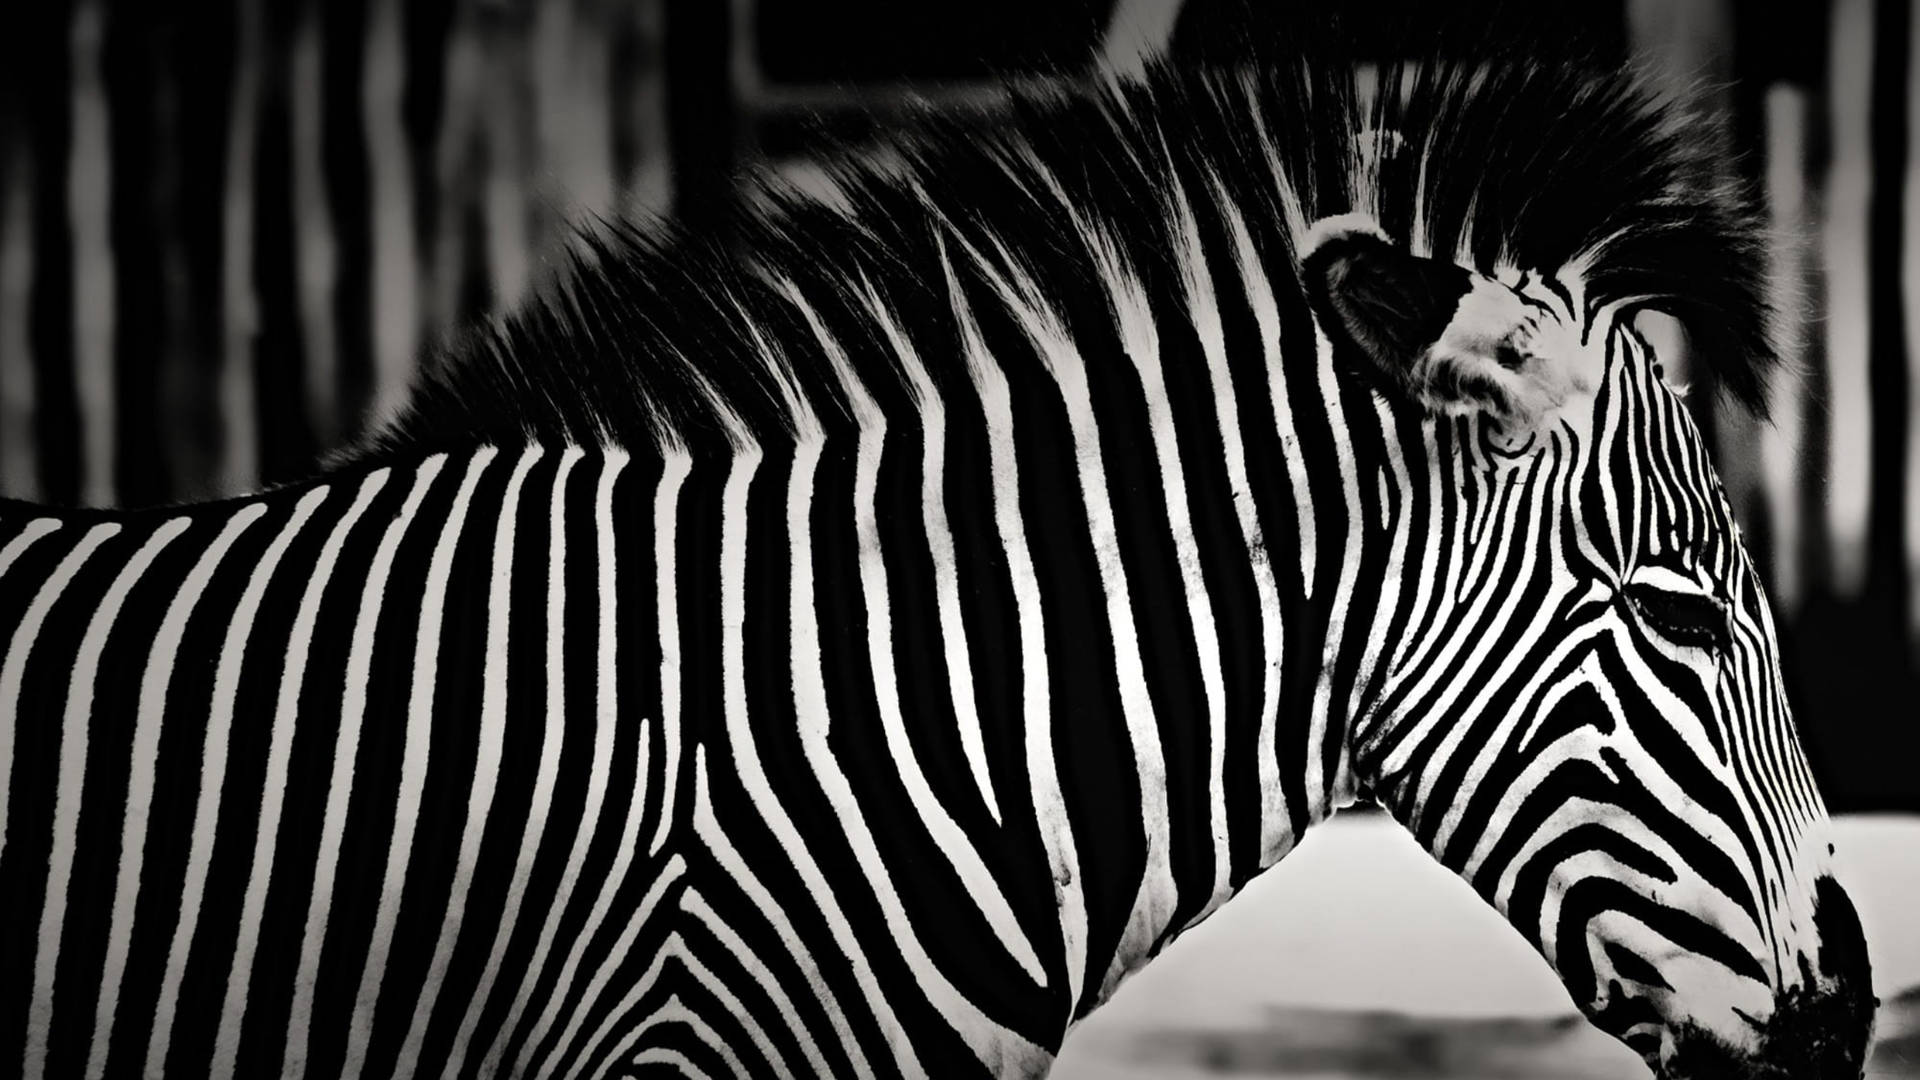 Zebra In Side View